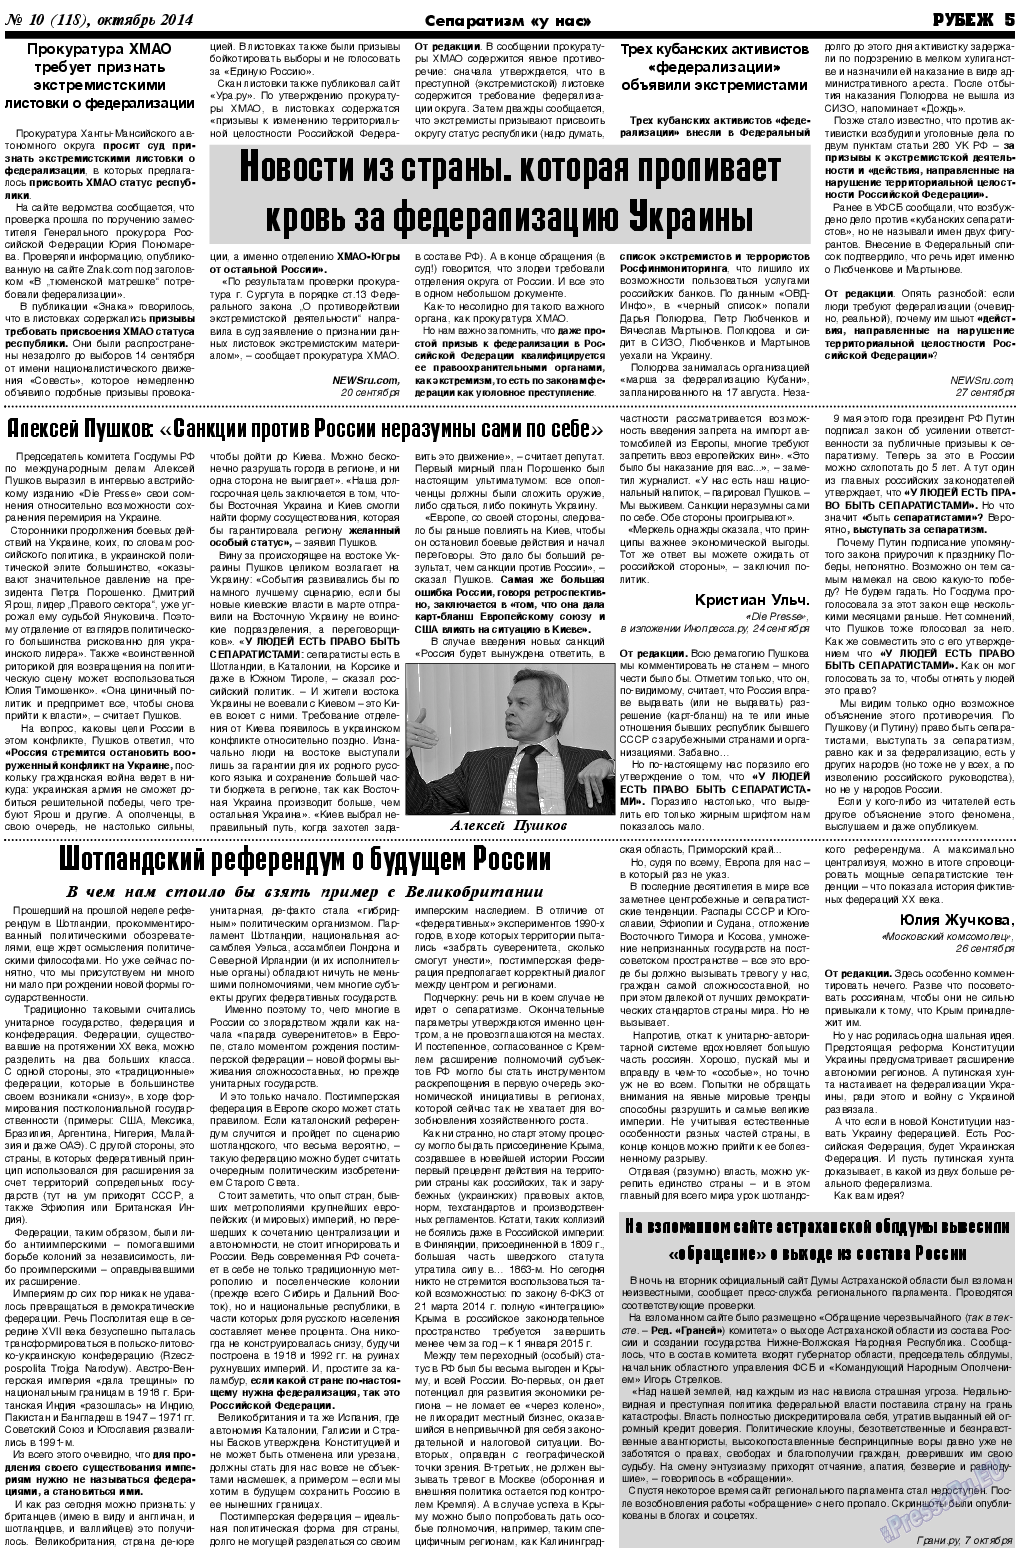 Рубеж, газета. 2014 №10 стр.5